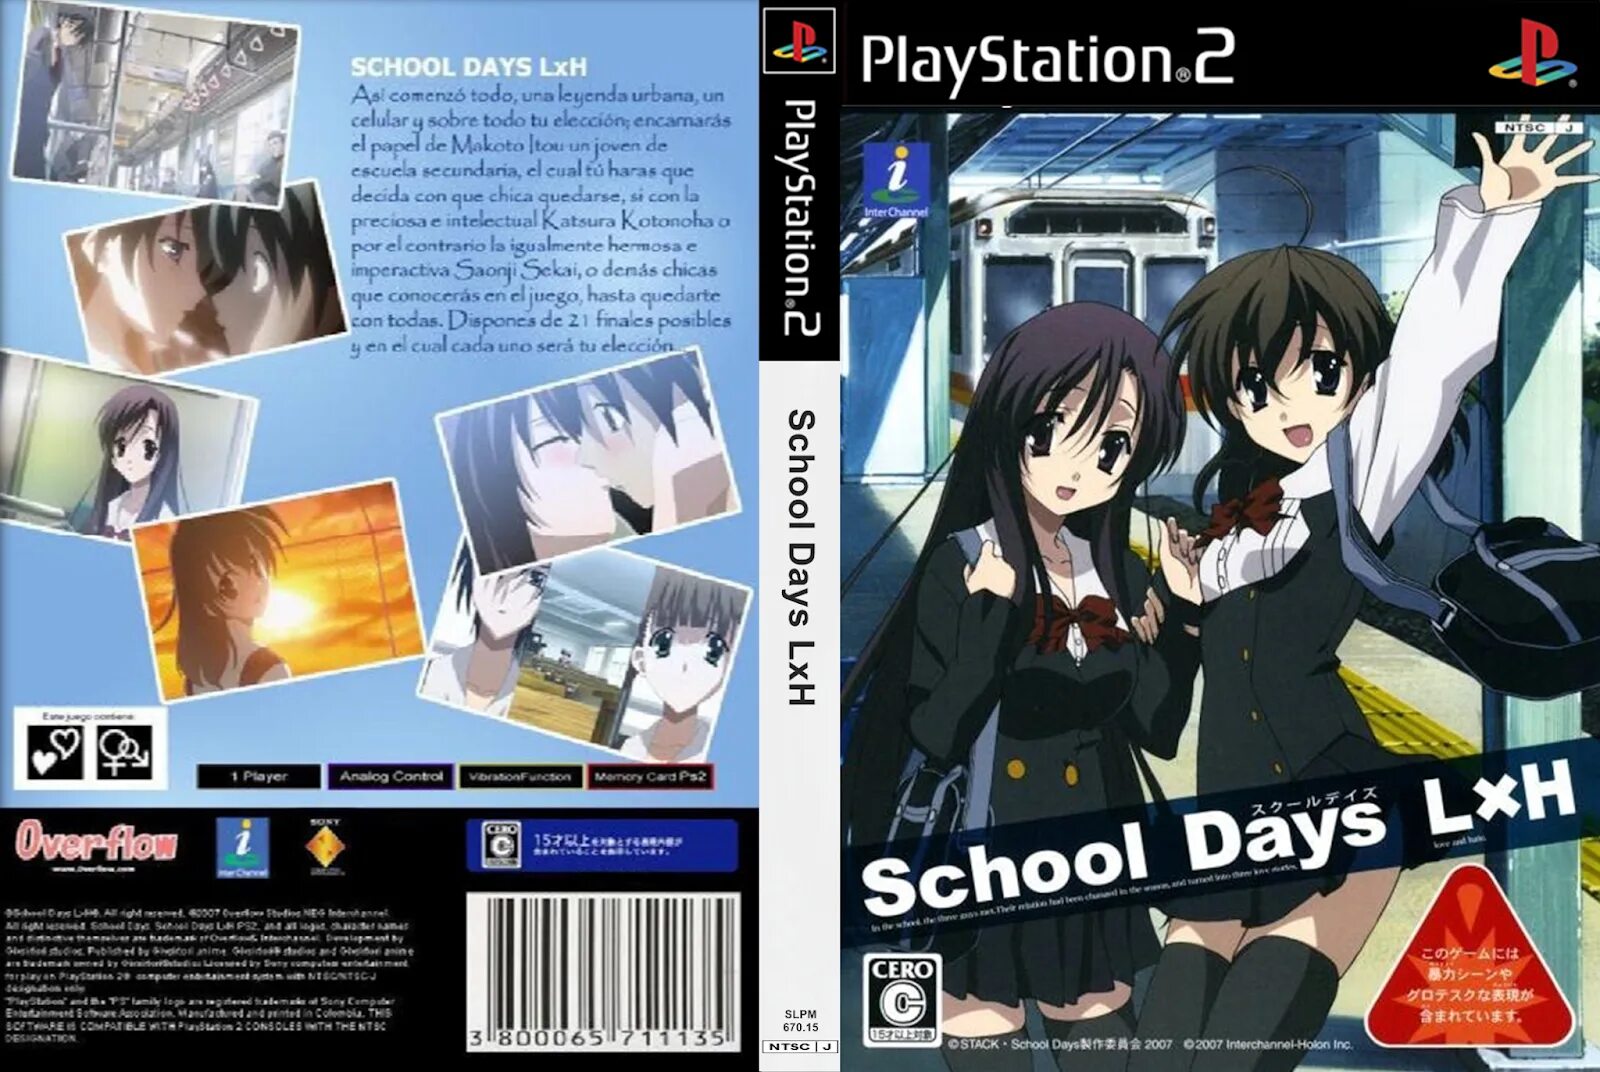 School days us. School Days LXH. School Days плакат. School Days русификатор. School Days взлом.